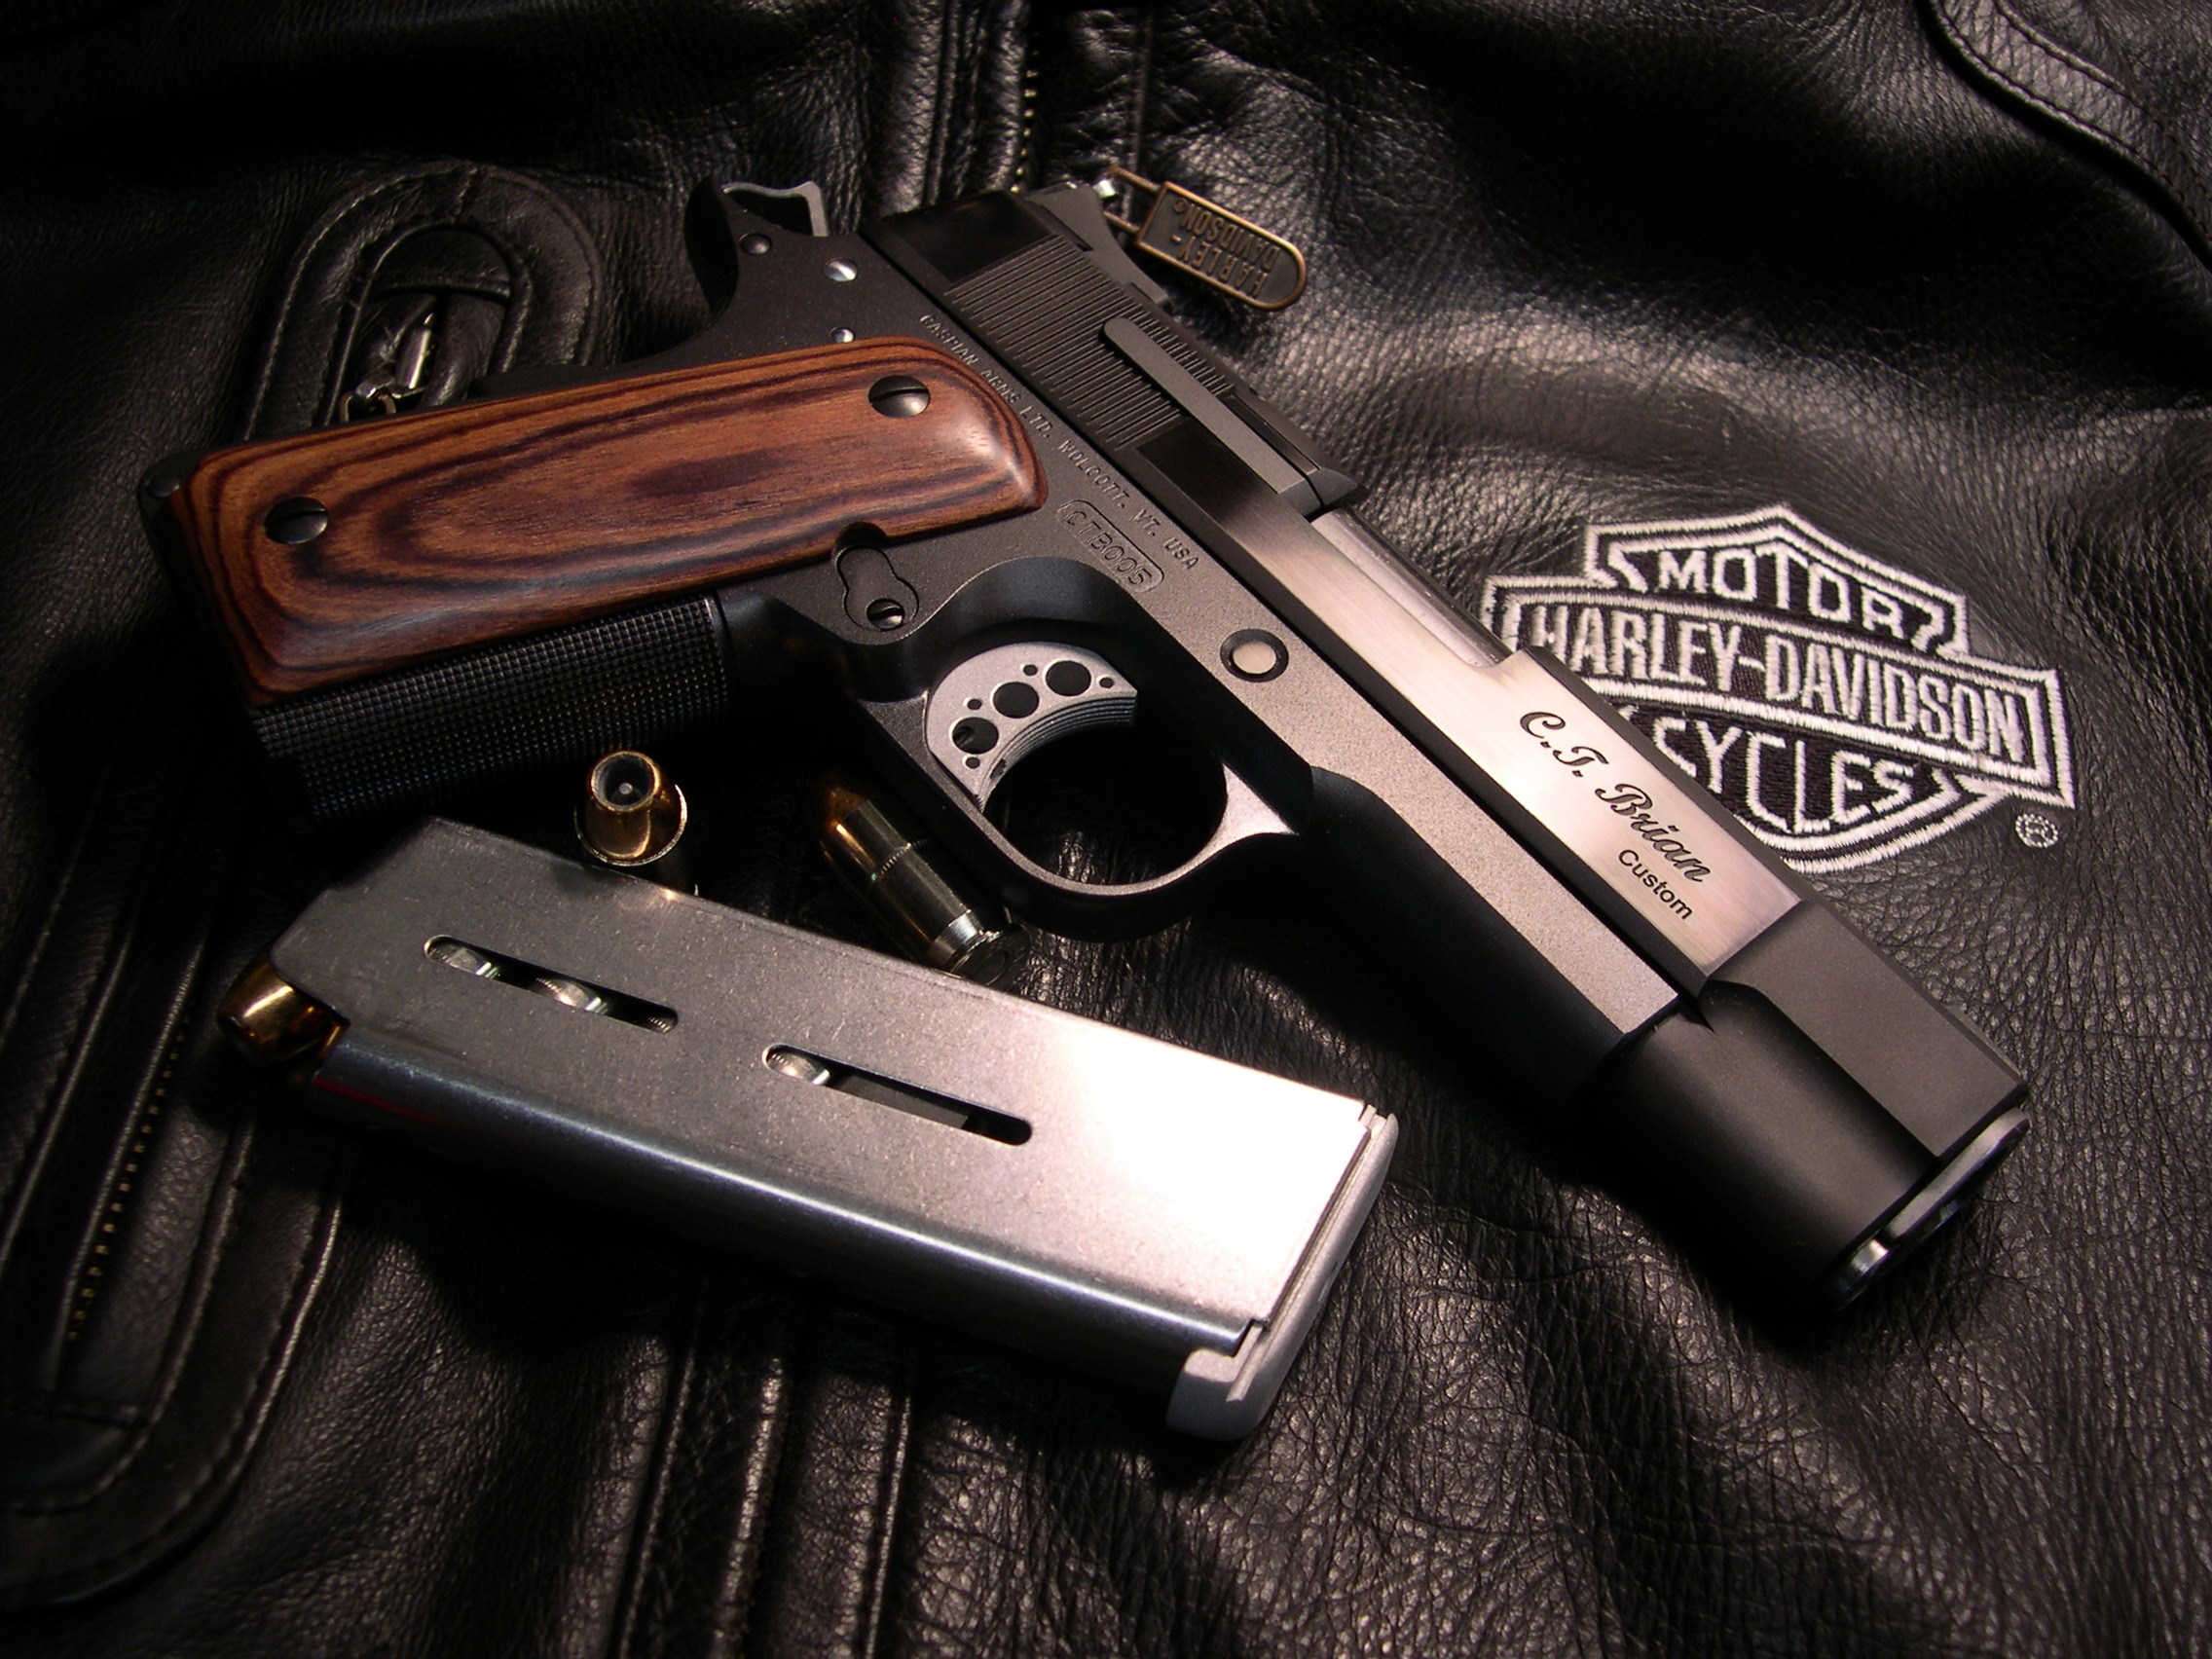 weapons, pistol Image for desktop